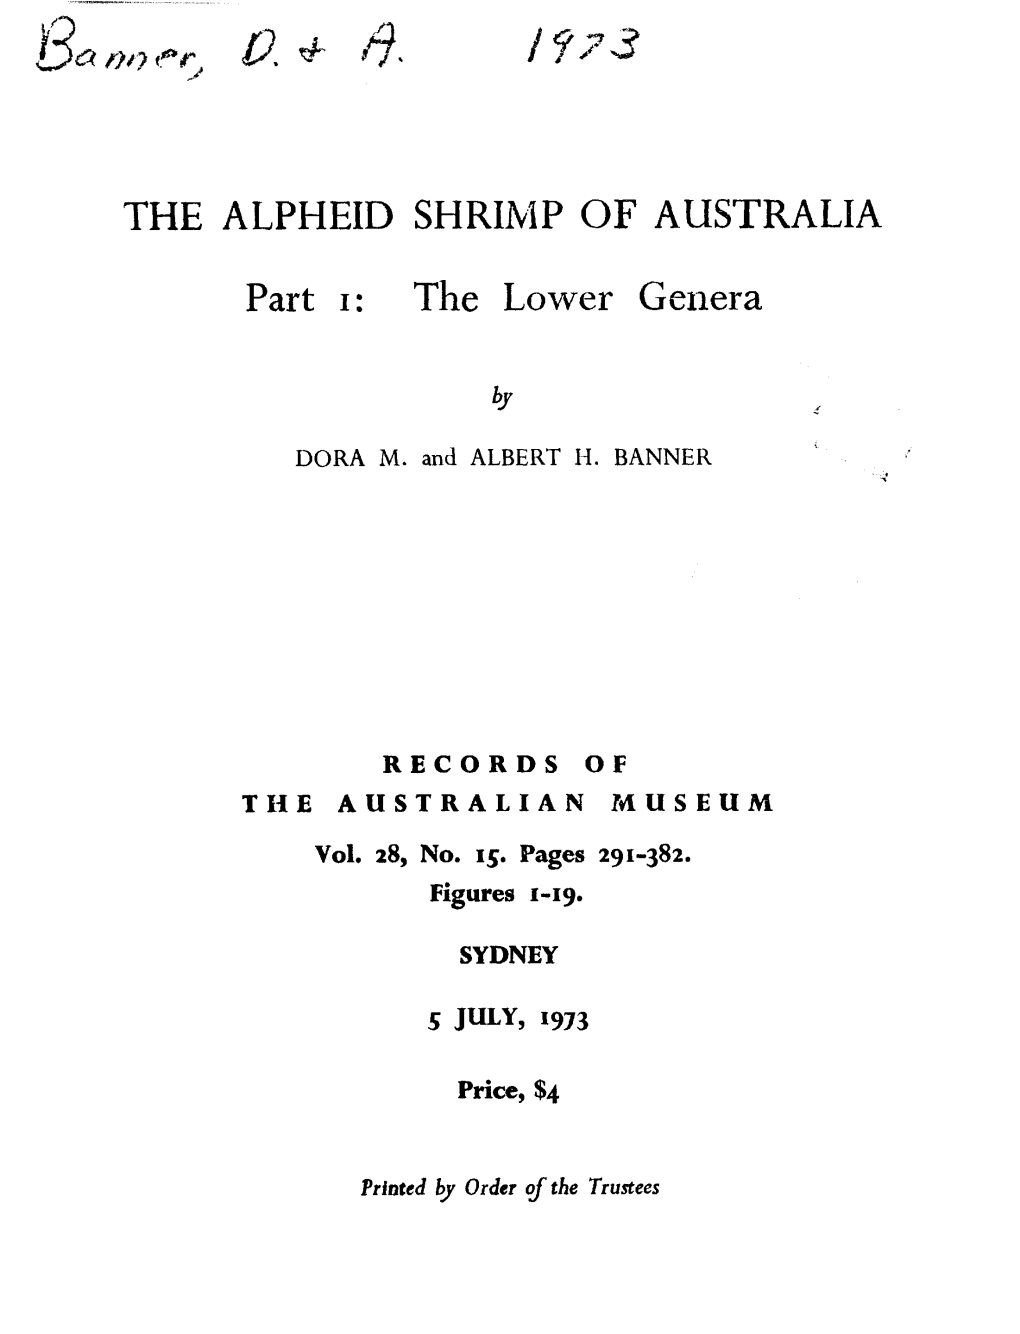 THE ALPHEID SHRIMP of AUSTRALIA Part I: the Lower Genera